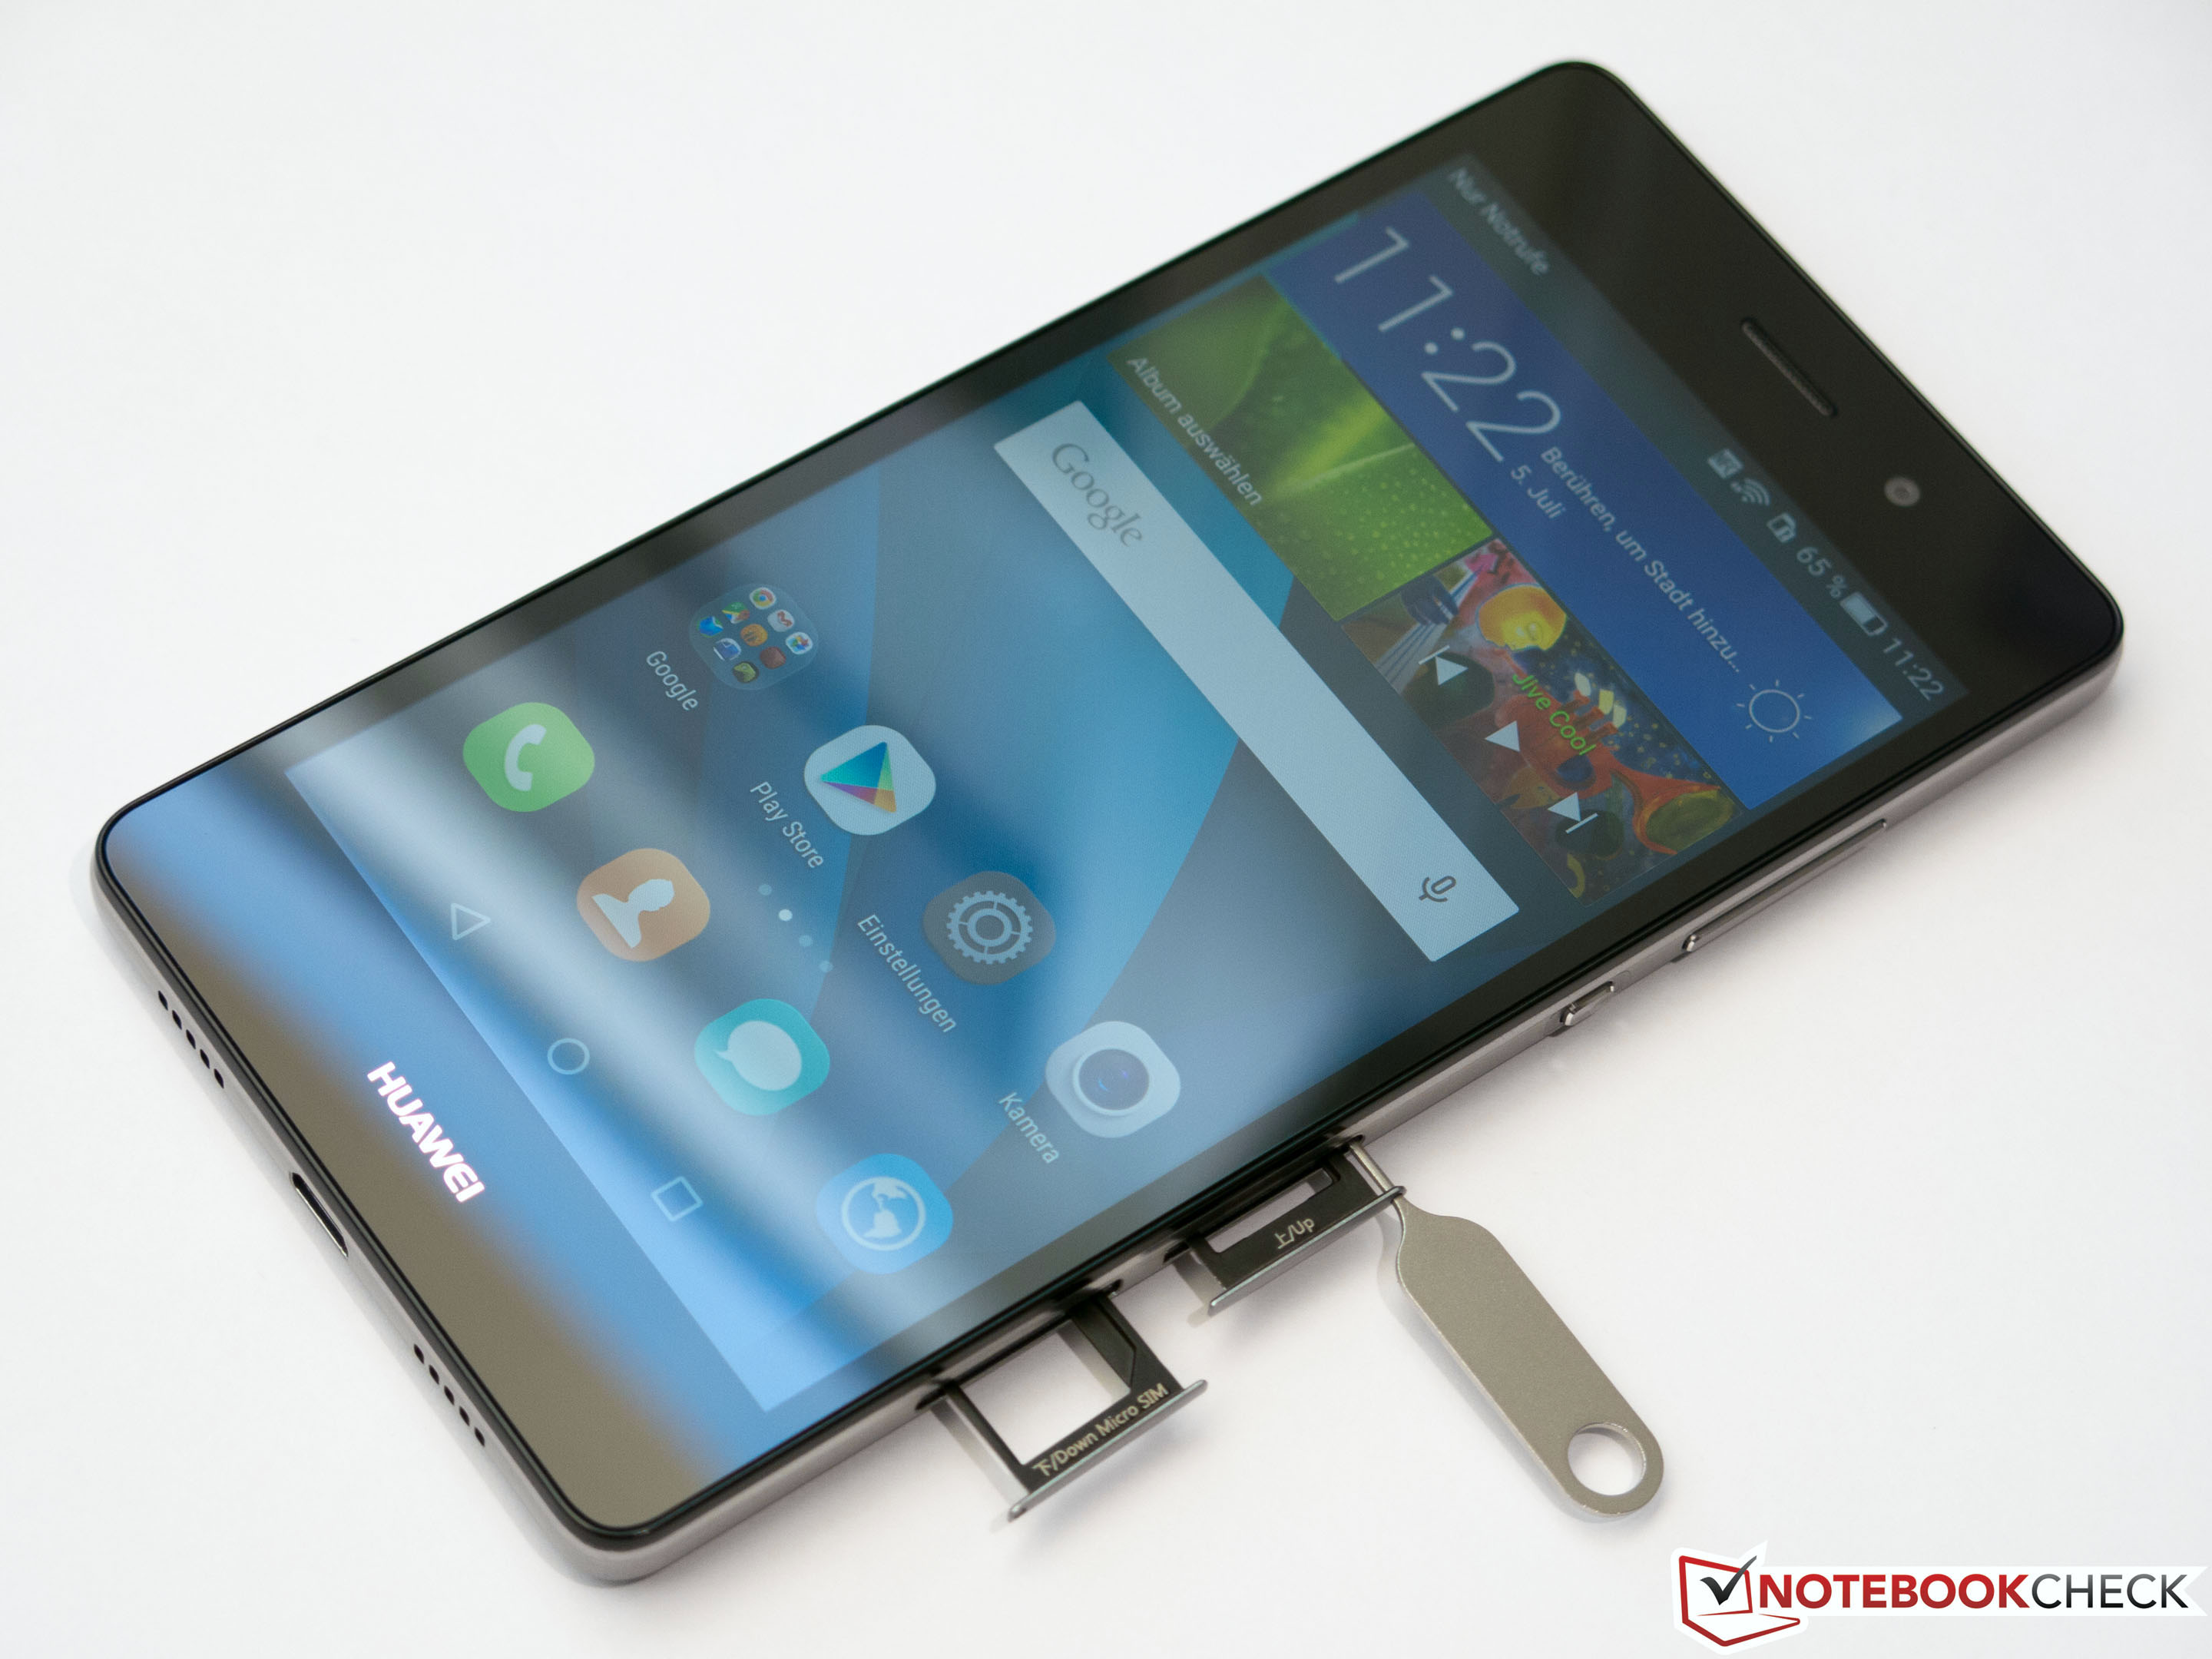 Breve análisis del Smartphone Huawei P8 lite 